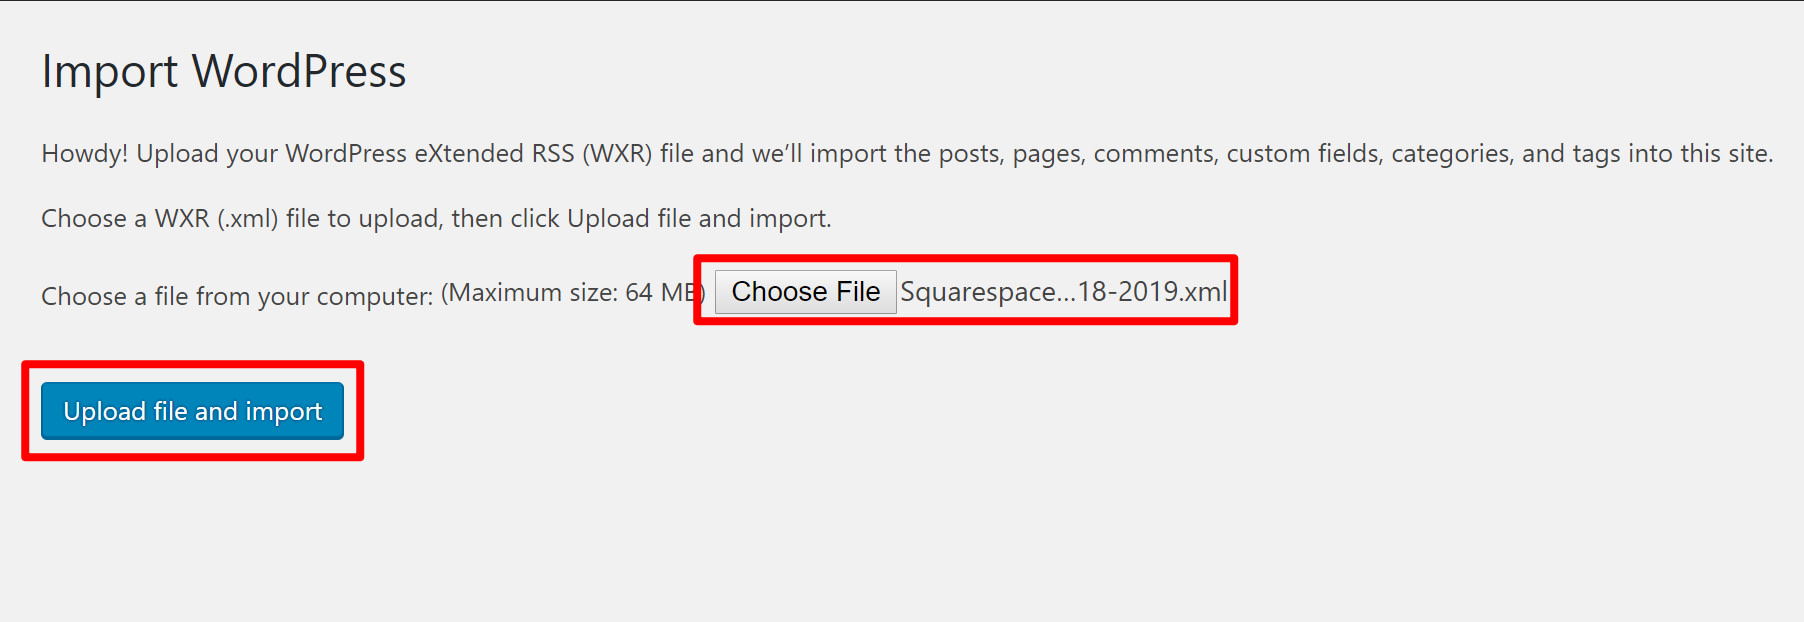 Choose Squarespace export file for WordPress